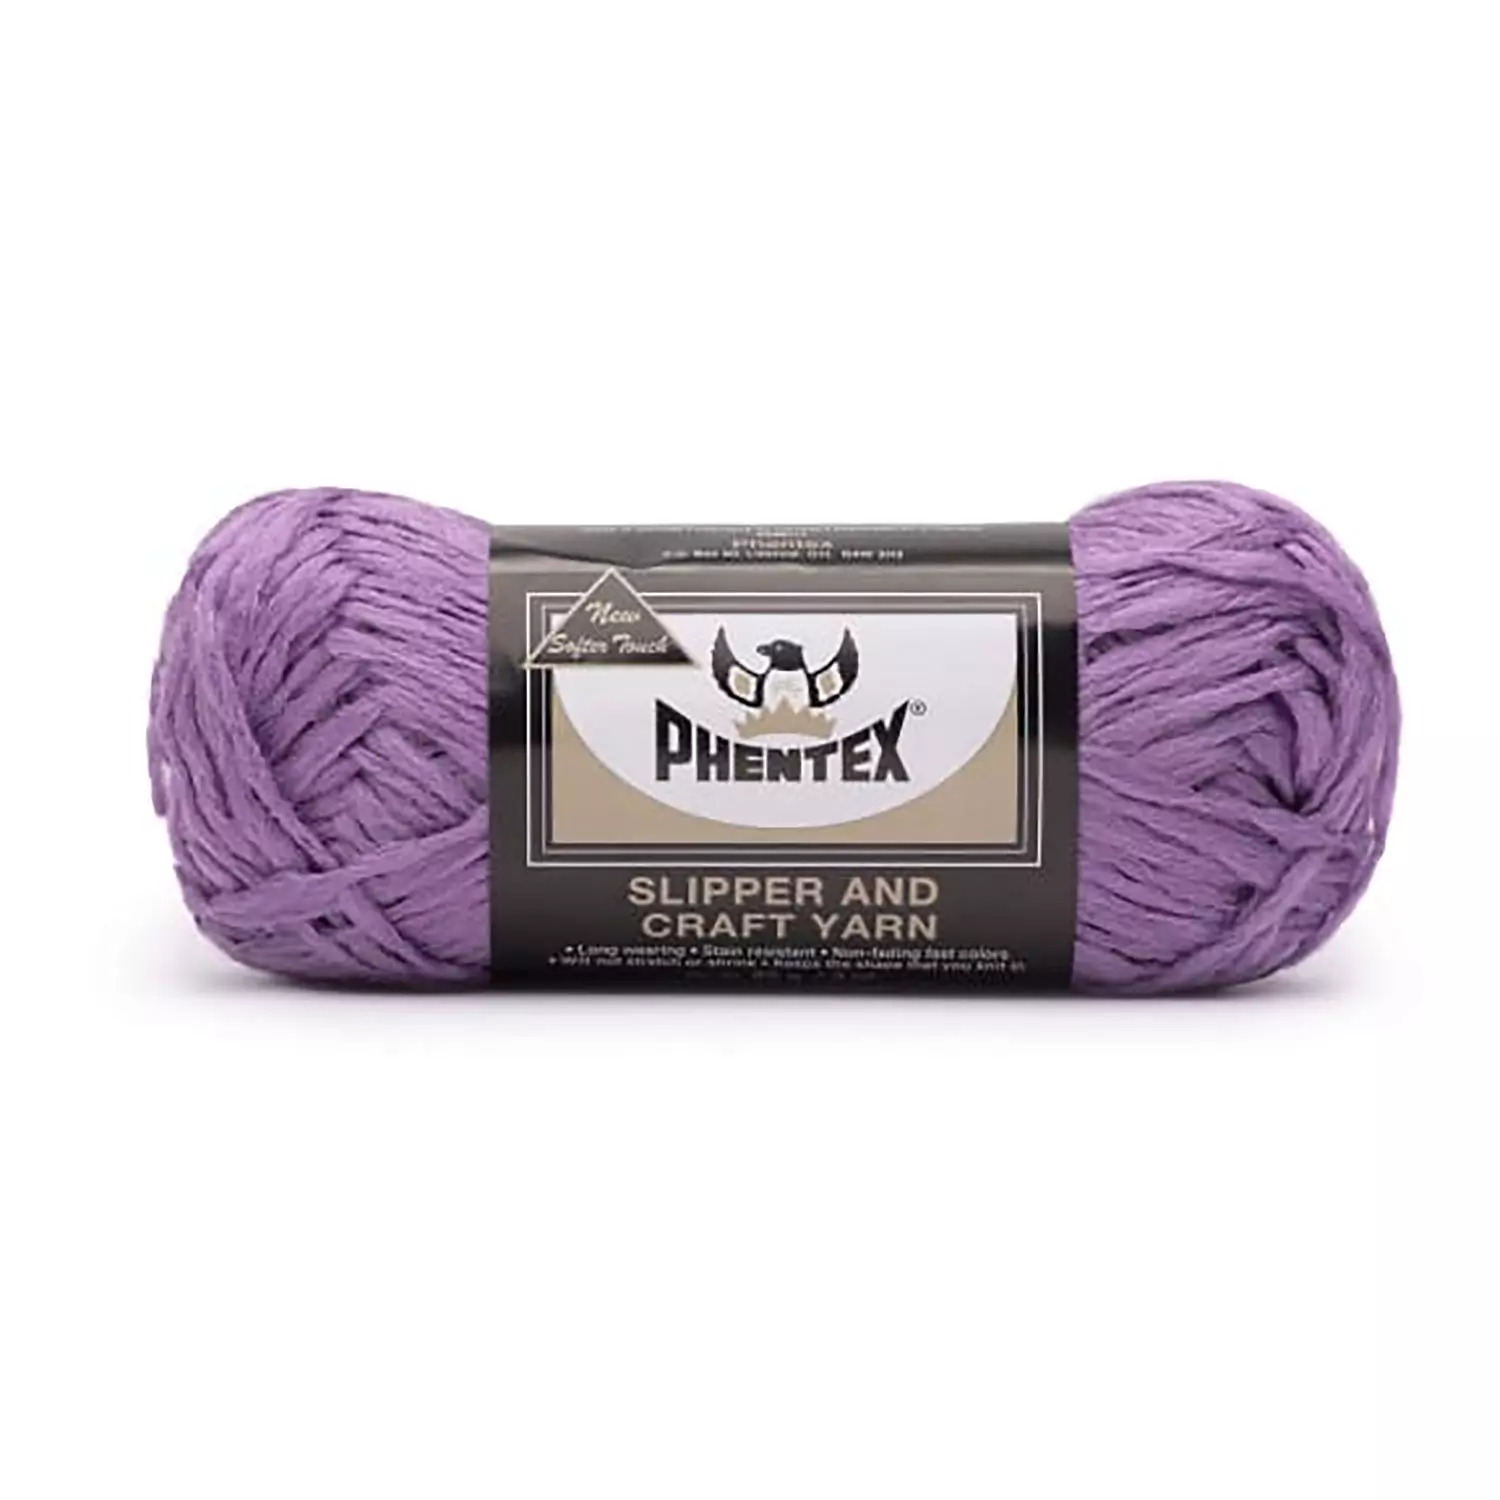 Phentex - Slipper and craft yarn, black currant